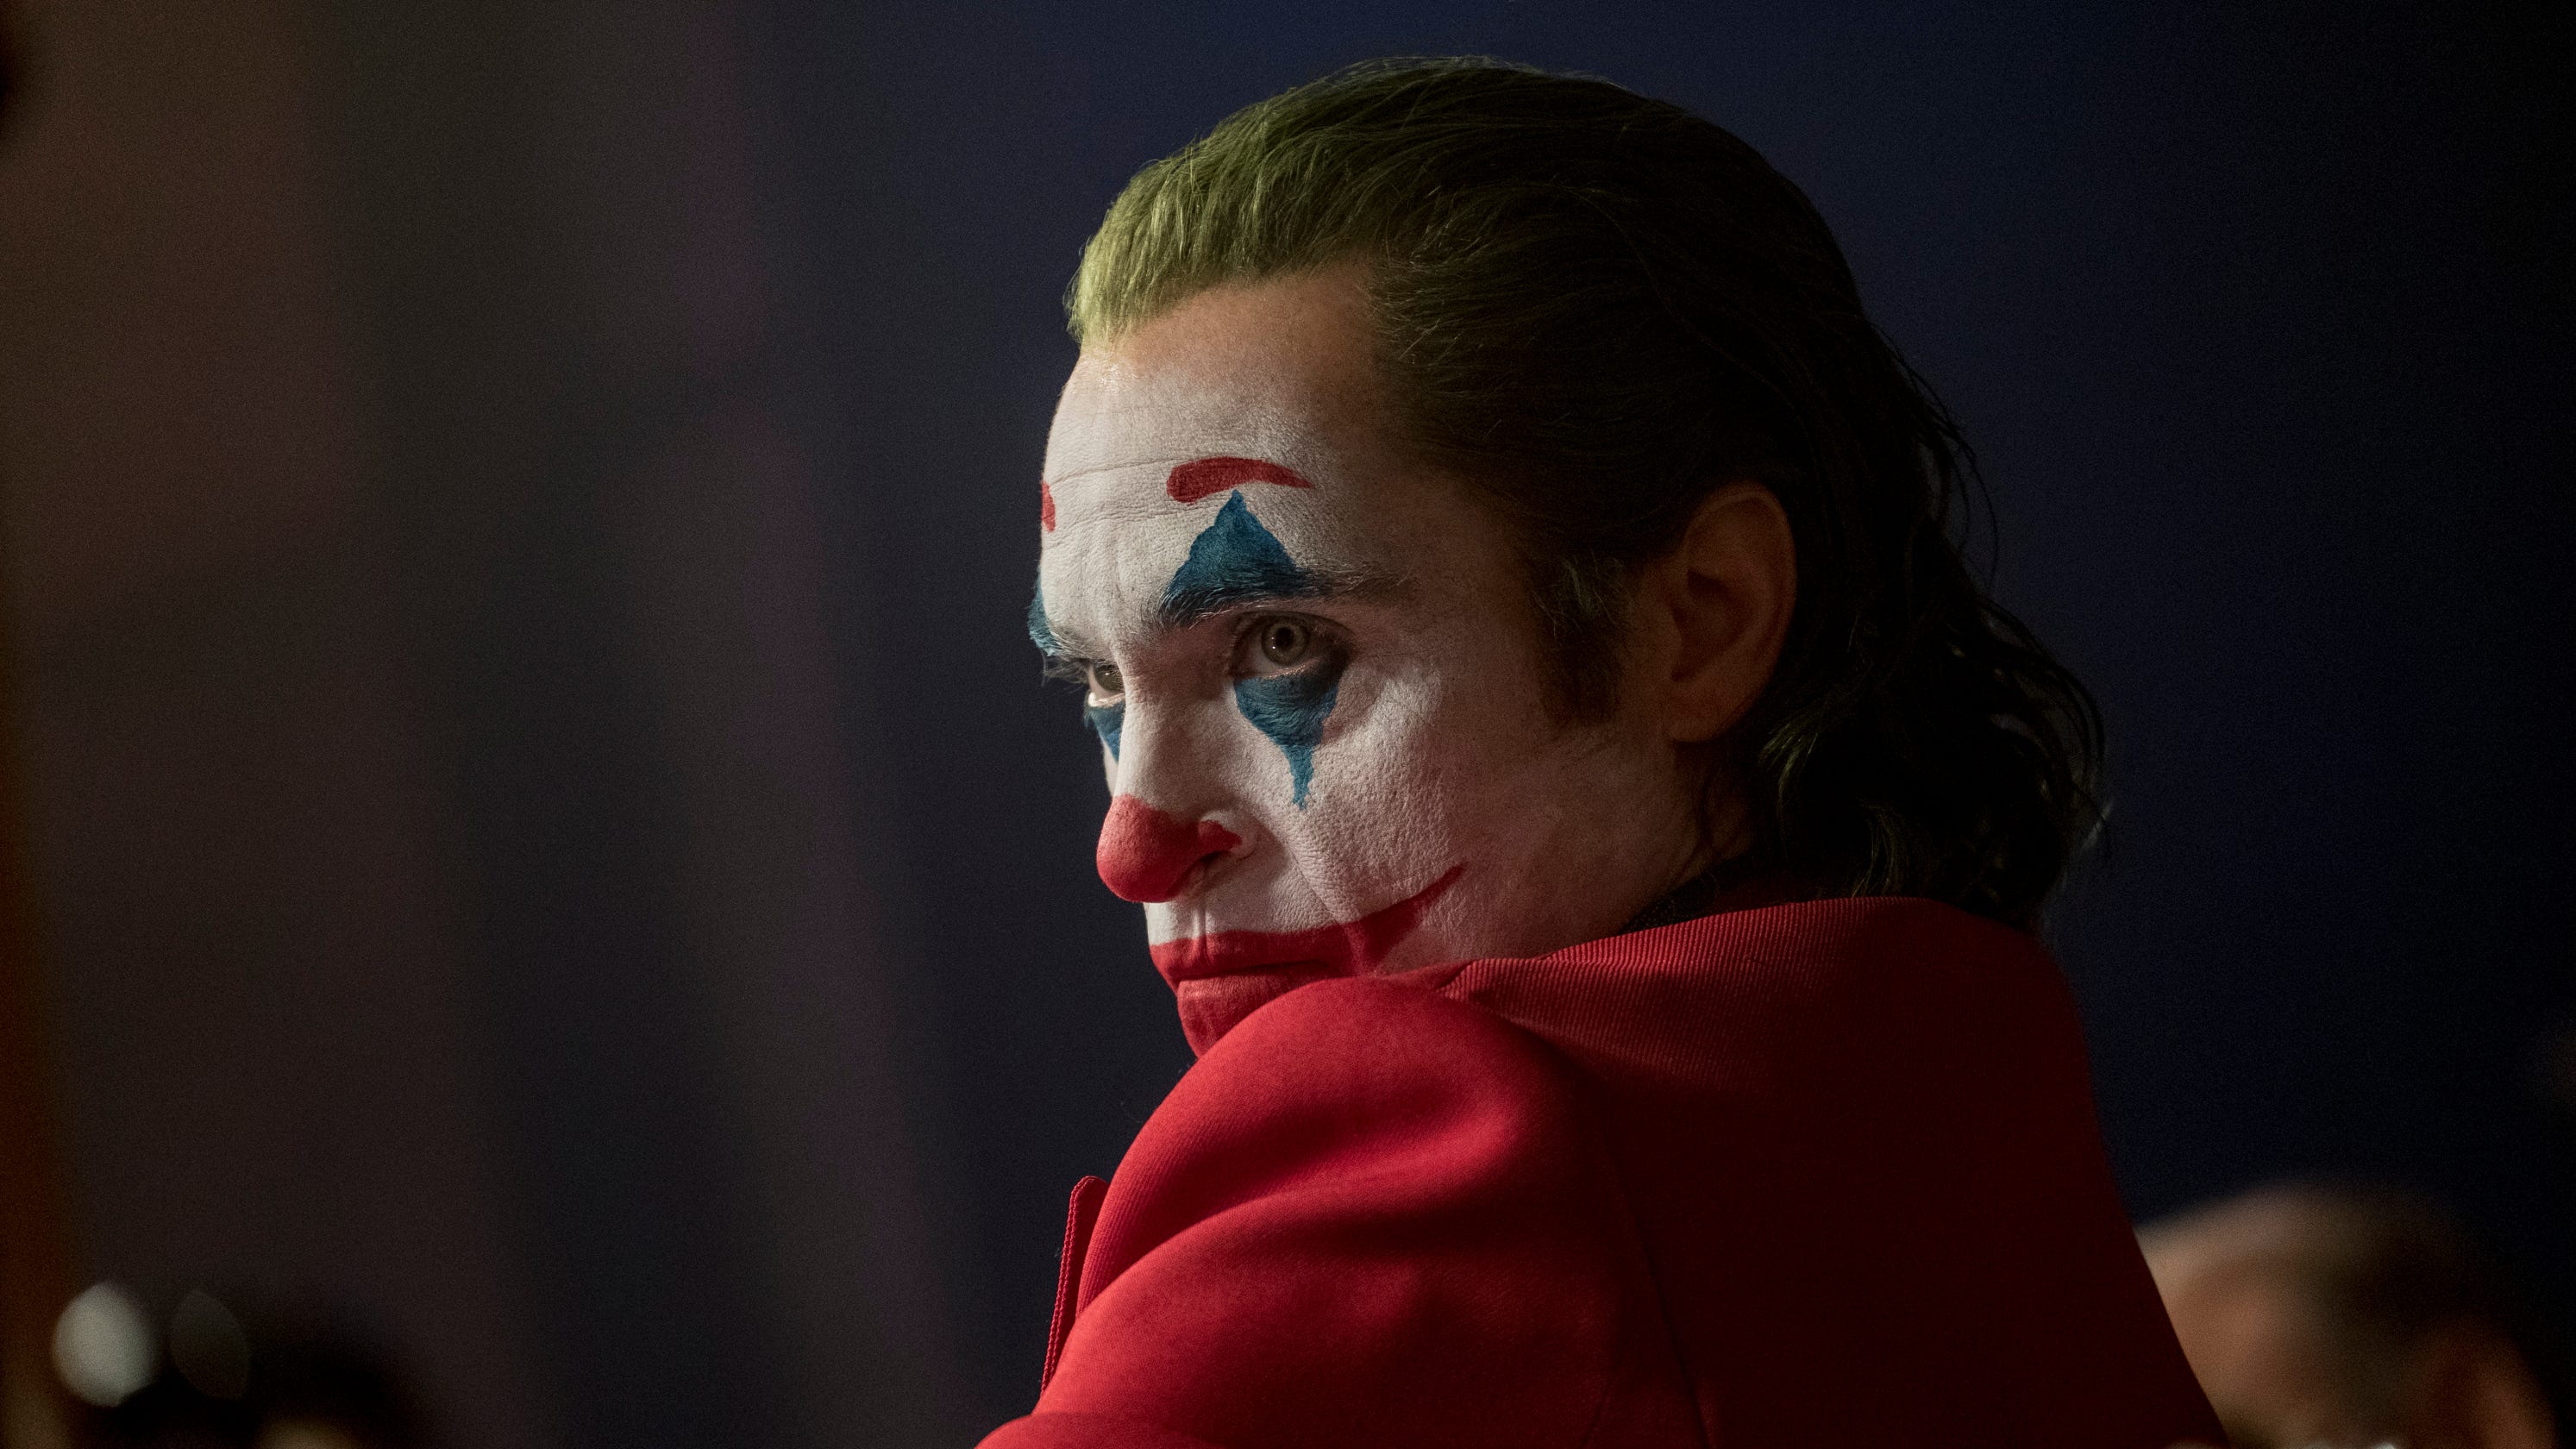 Joker 2019 Movie Joker Joaquin Phoenix Men Movies Film Stills Makeup Depth Of Field 2987x1680